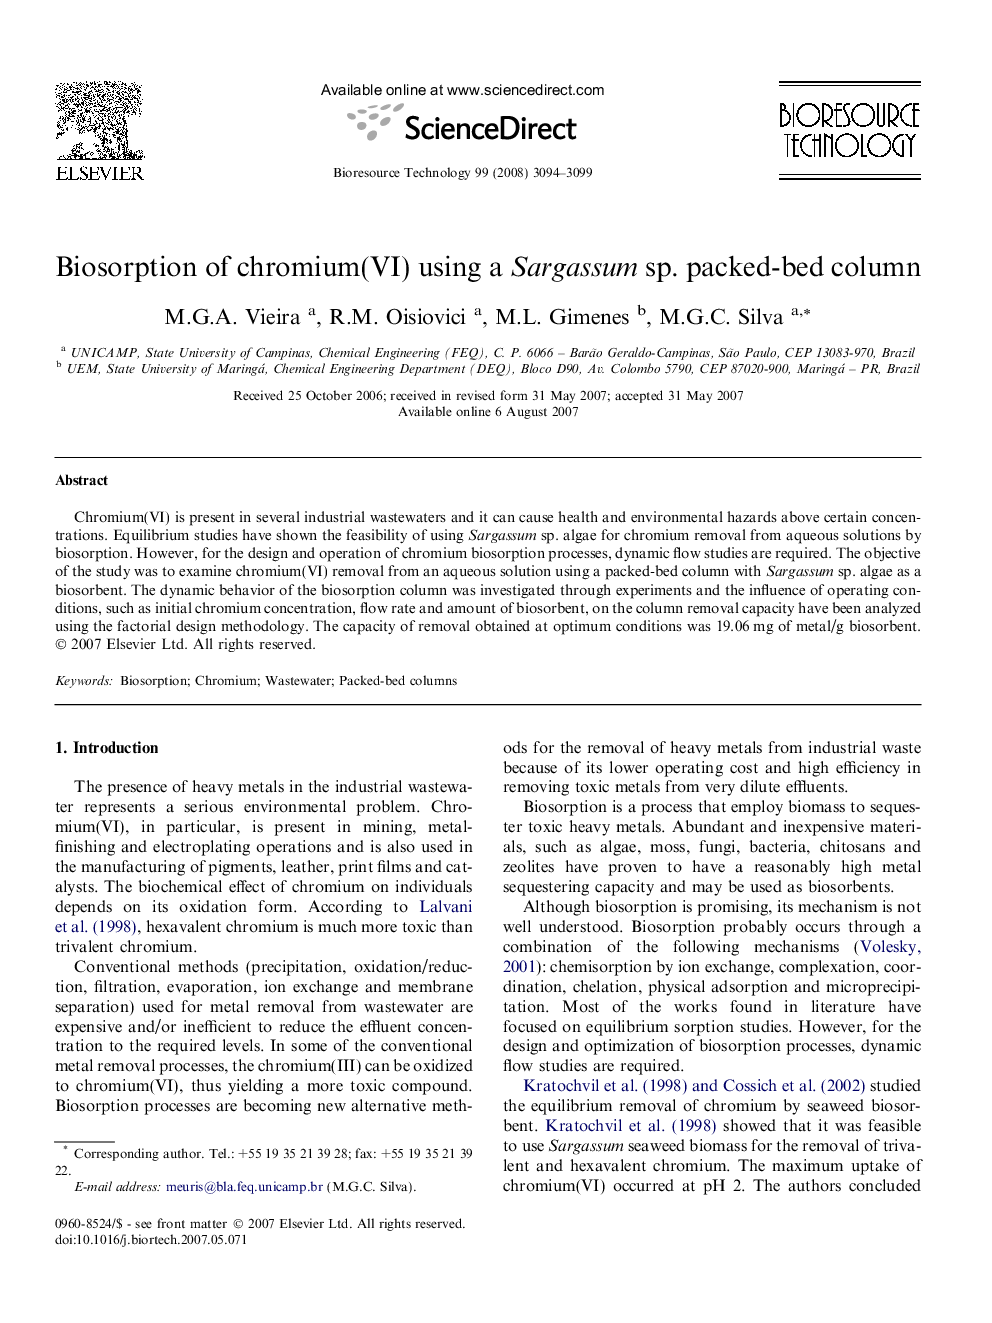 Biosorption of chromium(VI) using a Sargassum sp. packed-bed column